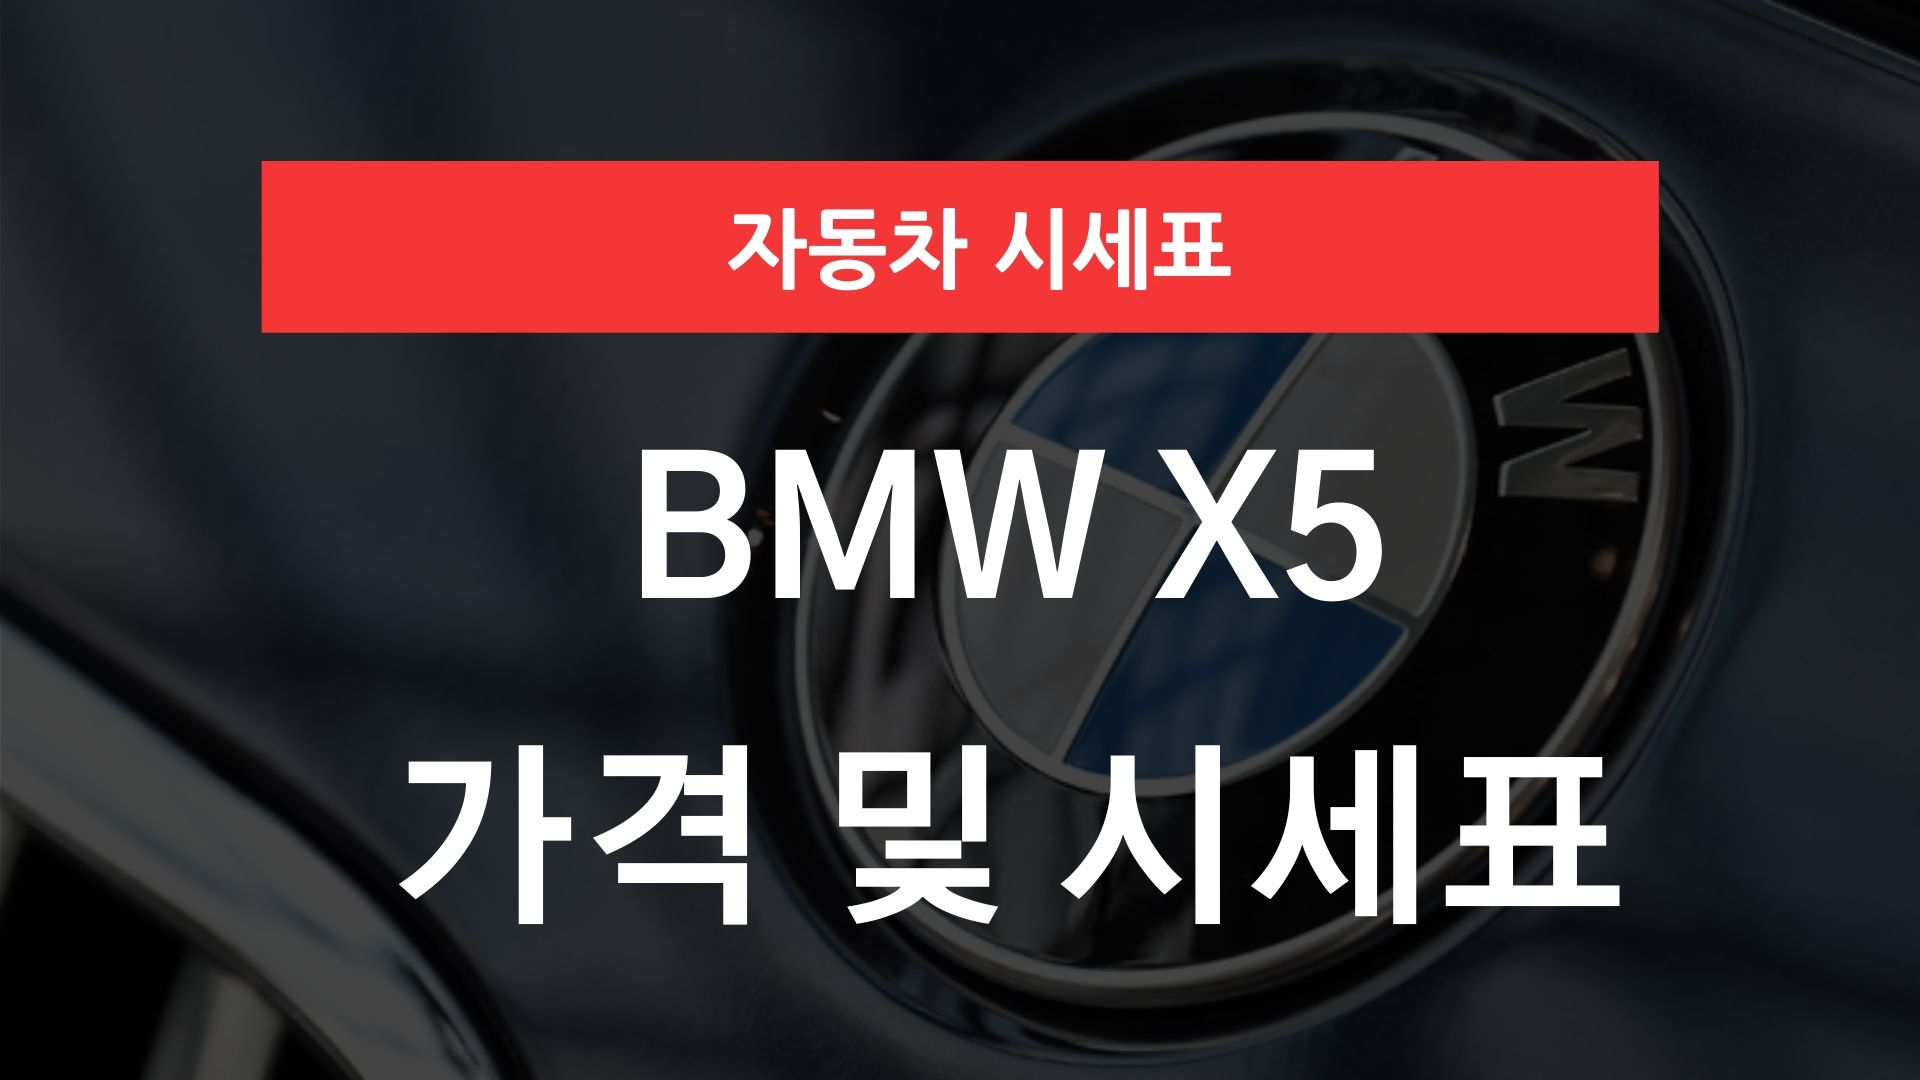 BMW X5 가격